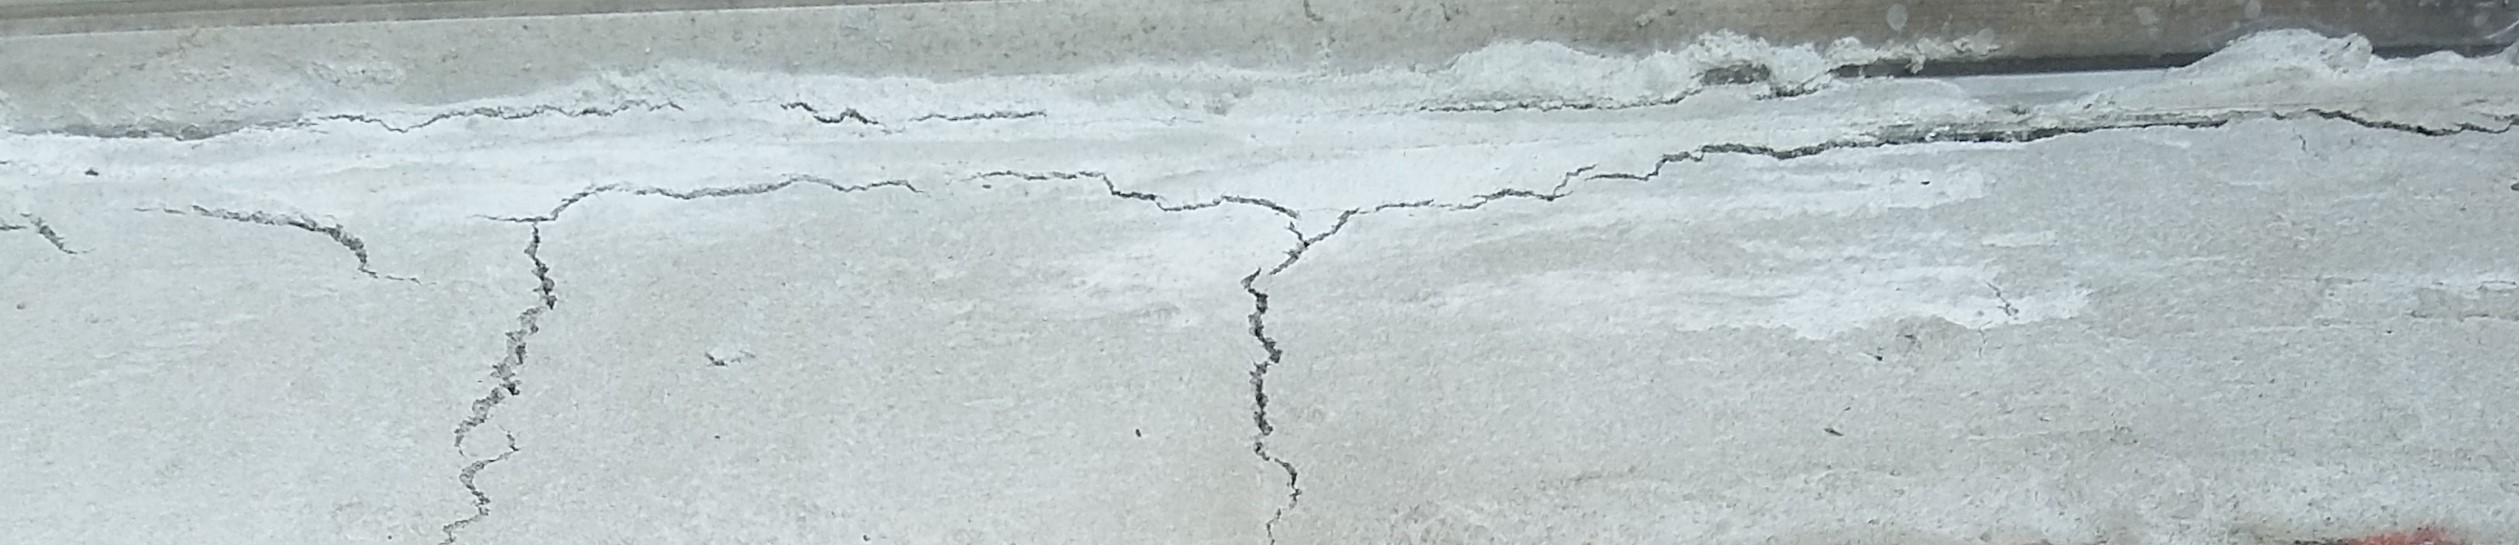 Cracking concrete